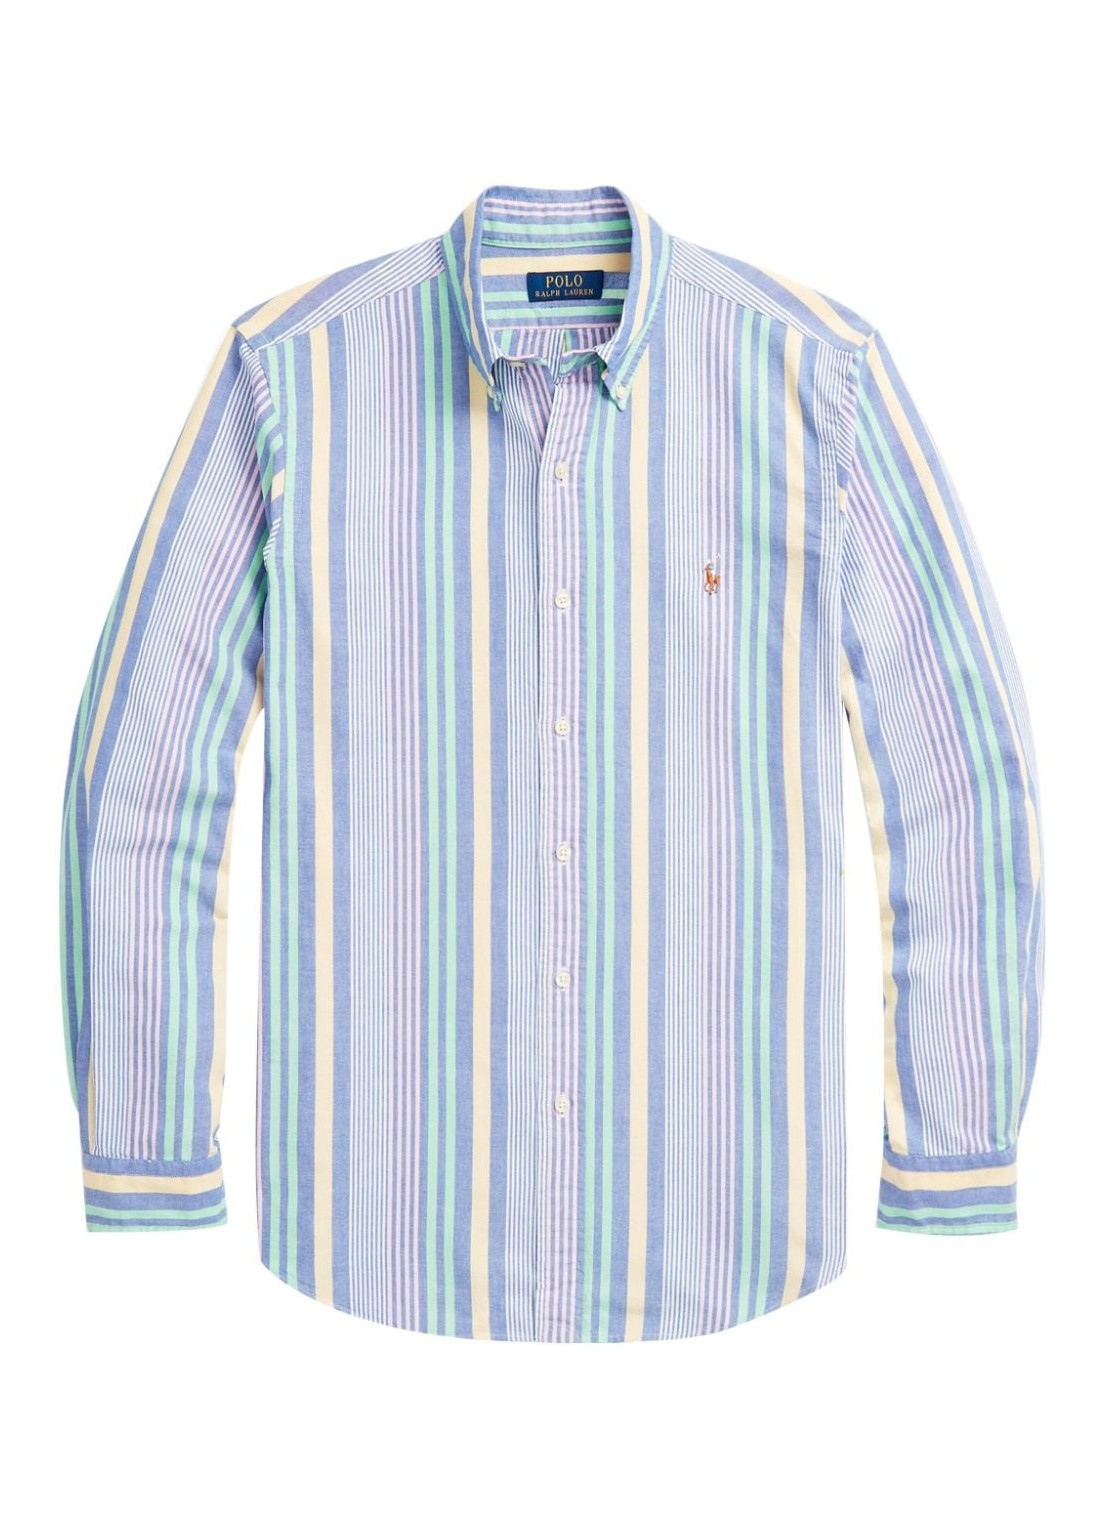 Camiseria polo ralph lauren shirt man cubdppcs-long sleeve-sport shirt 710928921001 6269 royal white